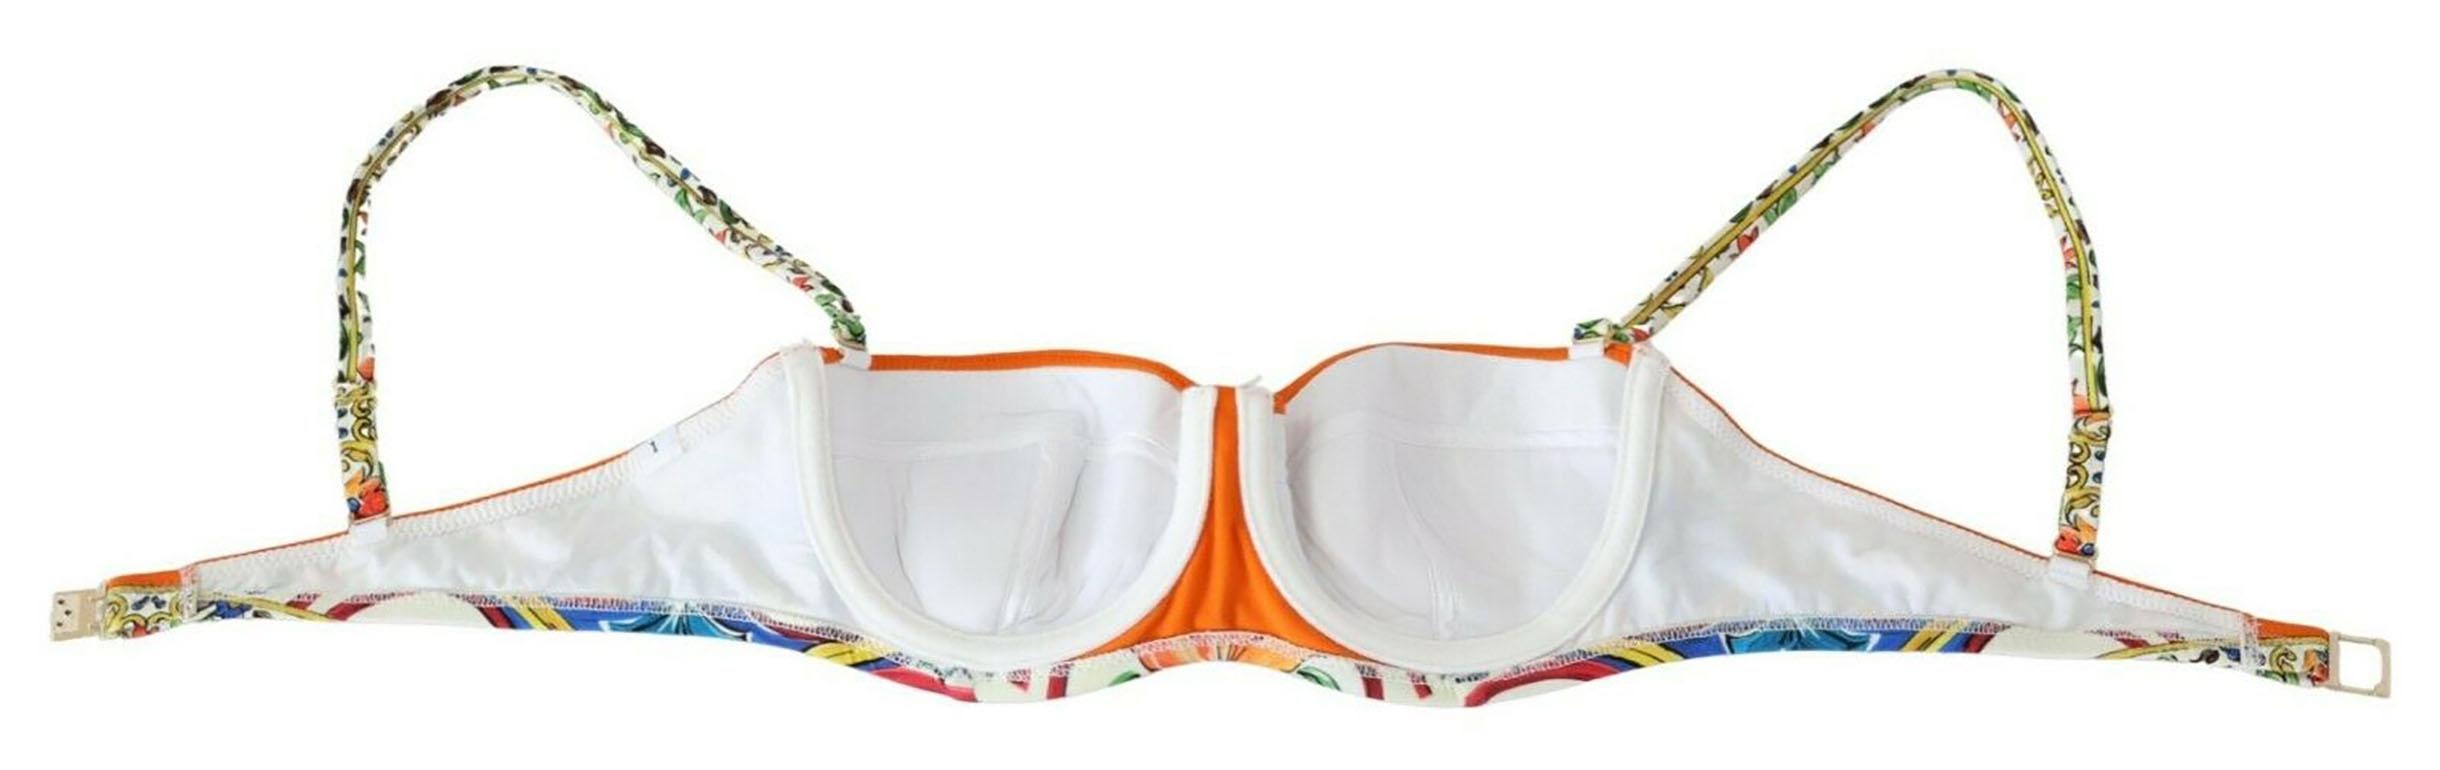 Dolce & Gabbana Multicolor Majolica 2-Piece Swimsuit Swimwear Bikini Beachwear  1